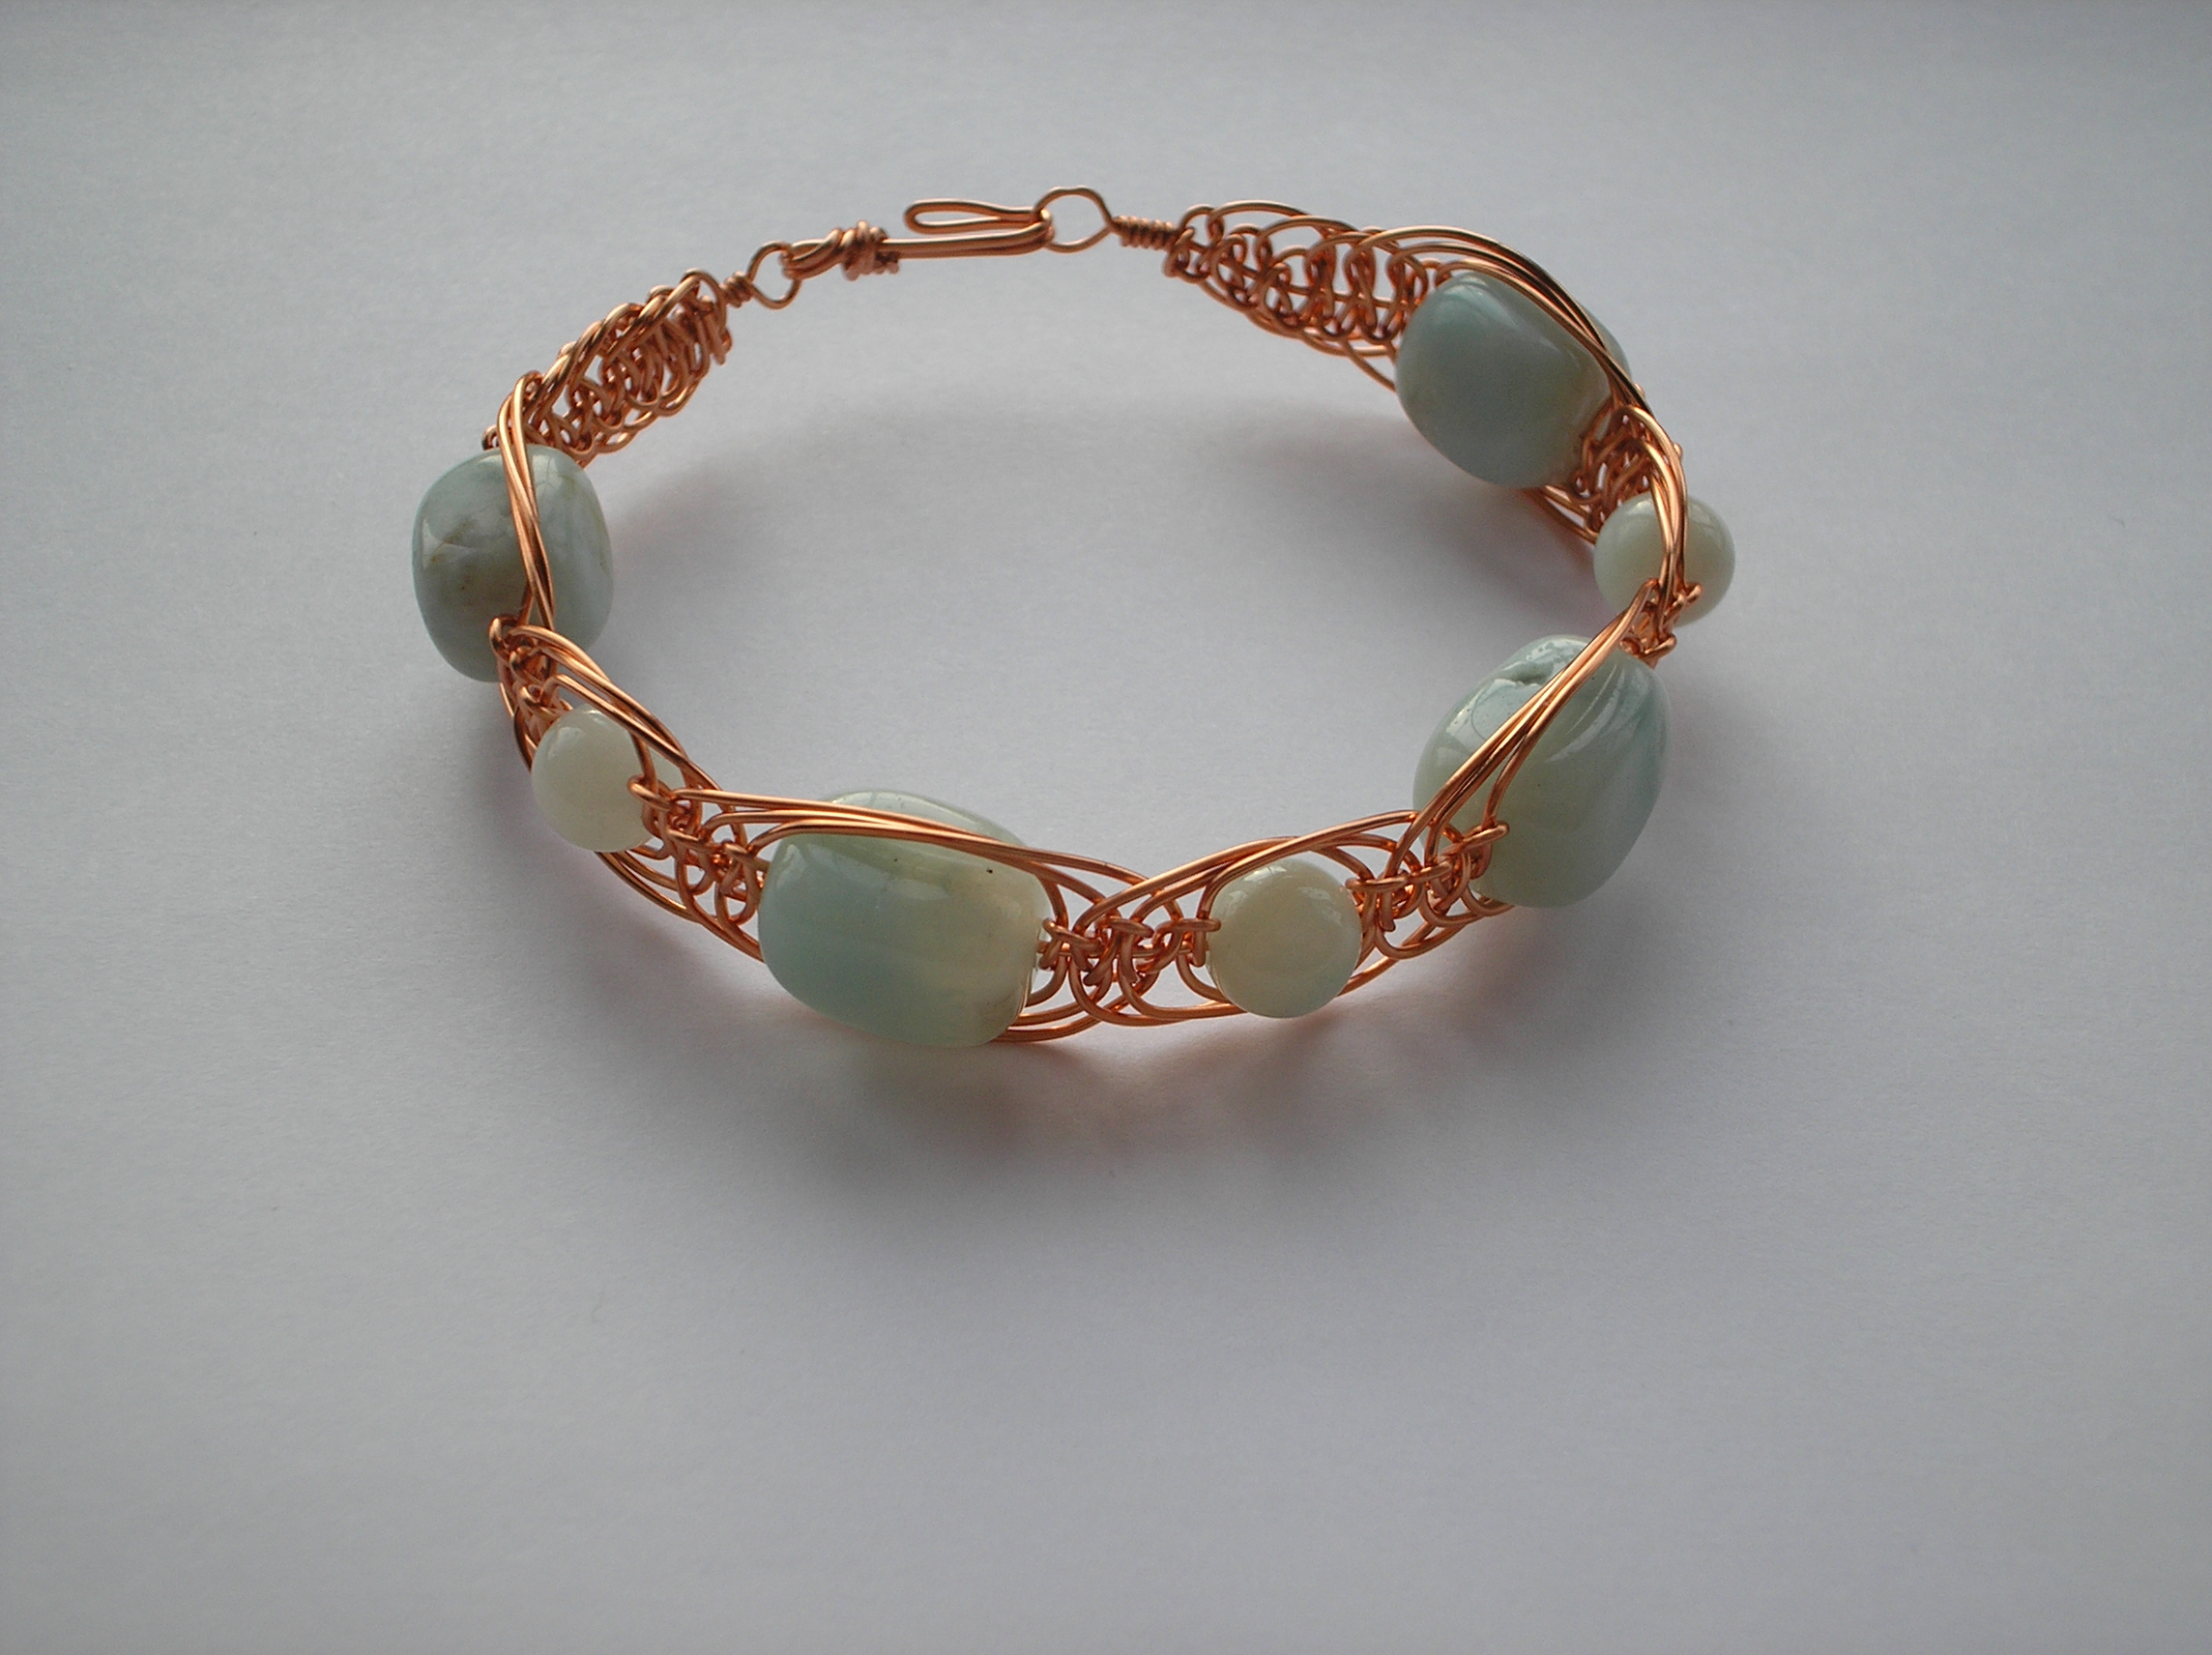 Amazonite and copper bracelet